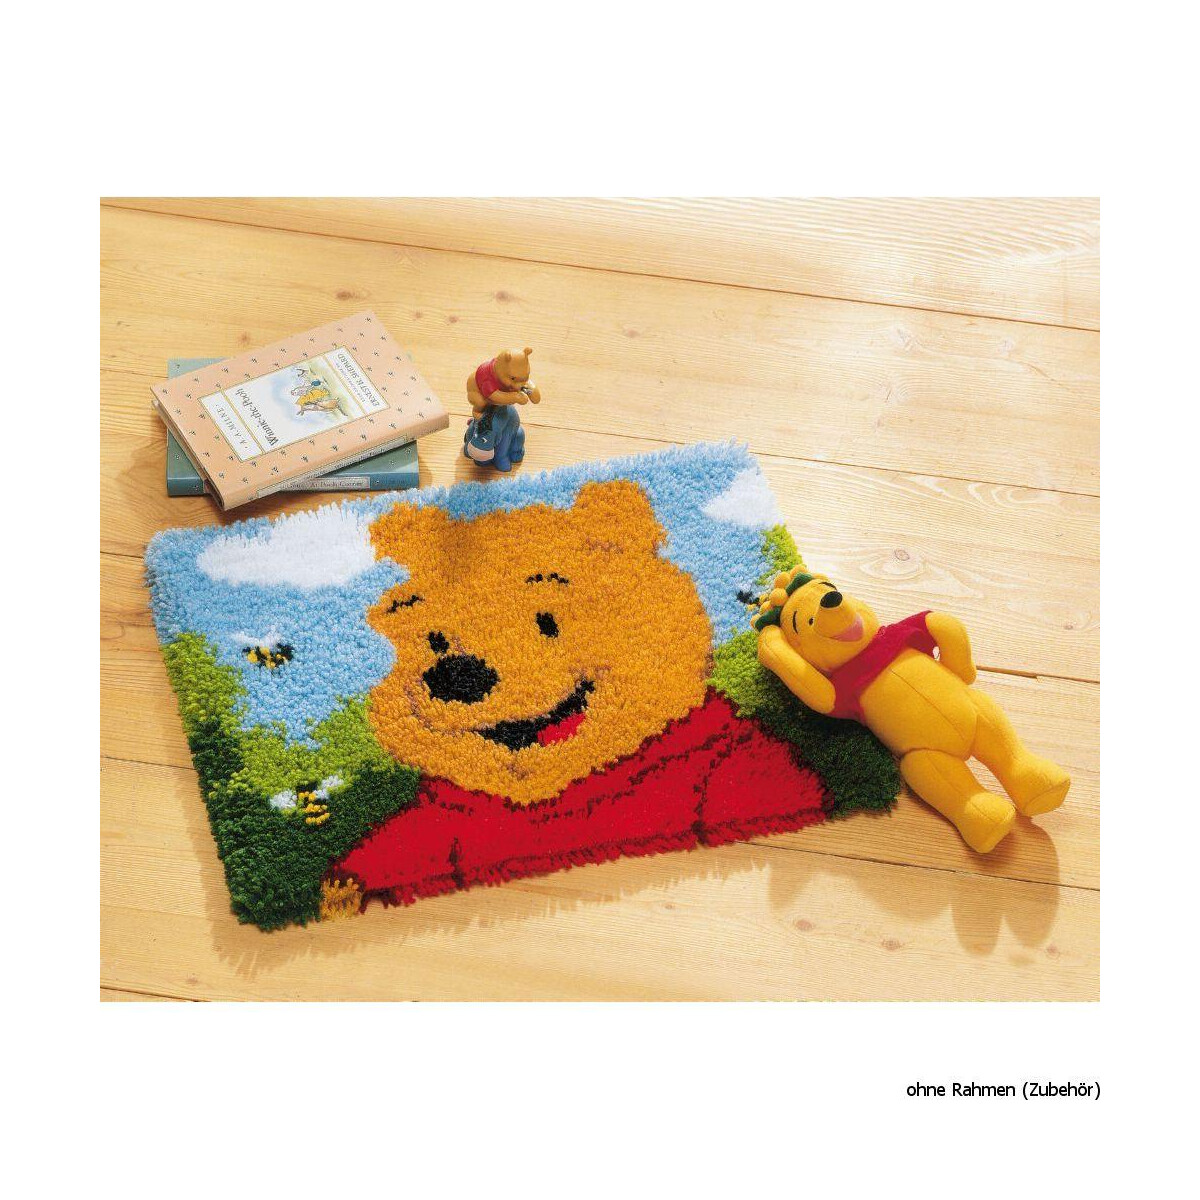 Vervaco Latch hook rug kit Disney Winnie the Pooh, DIY